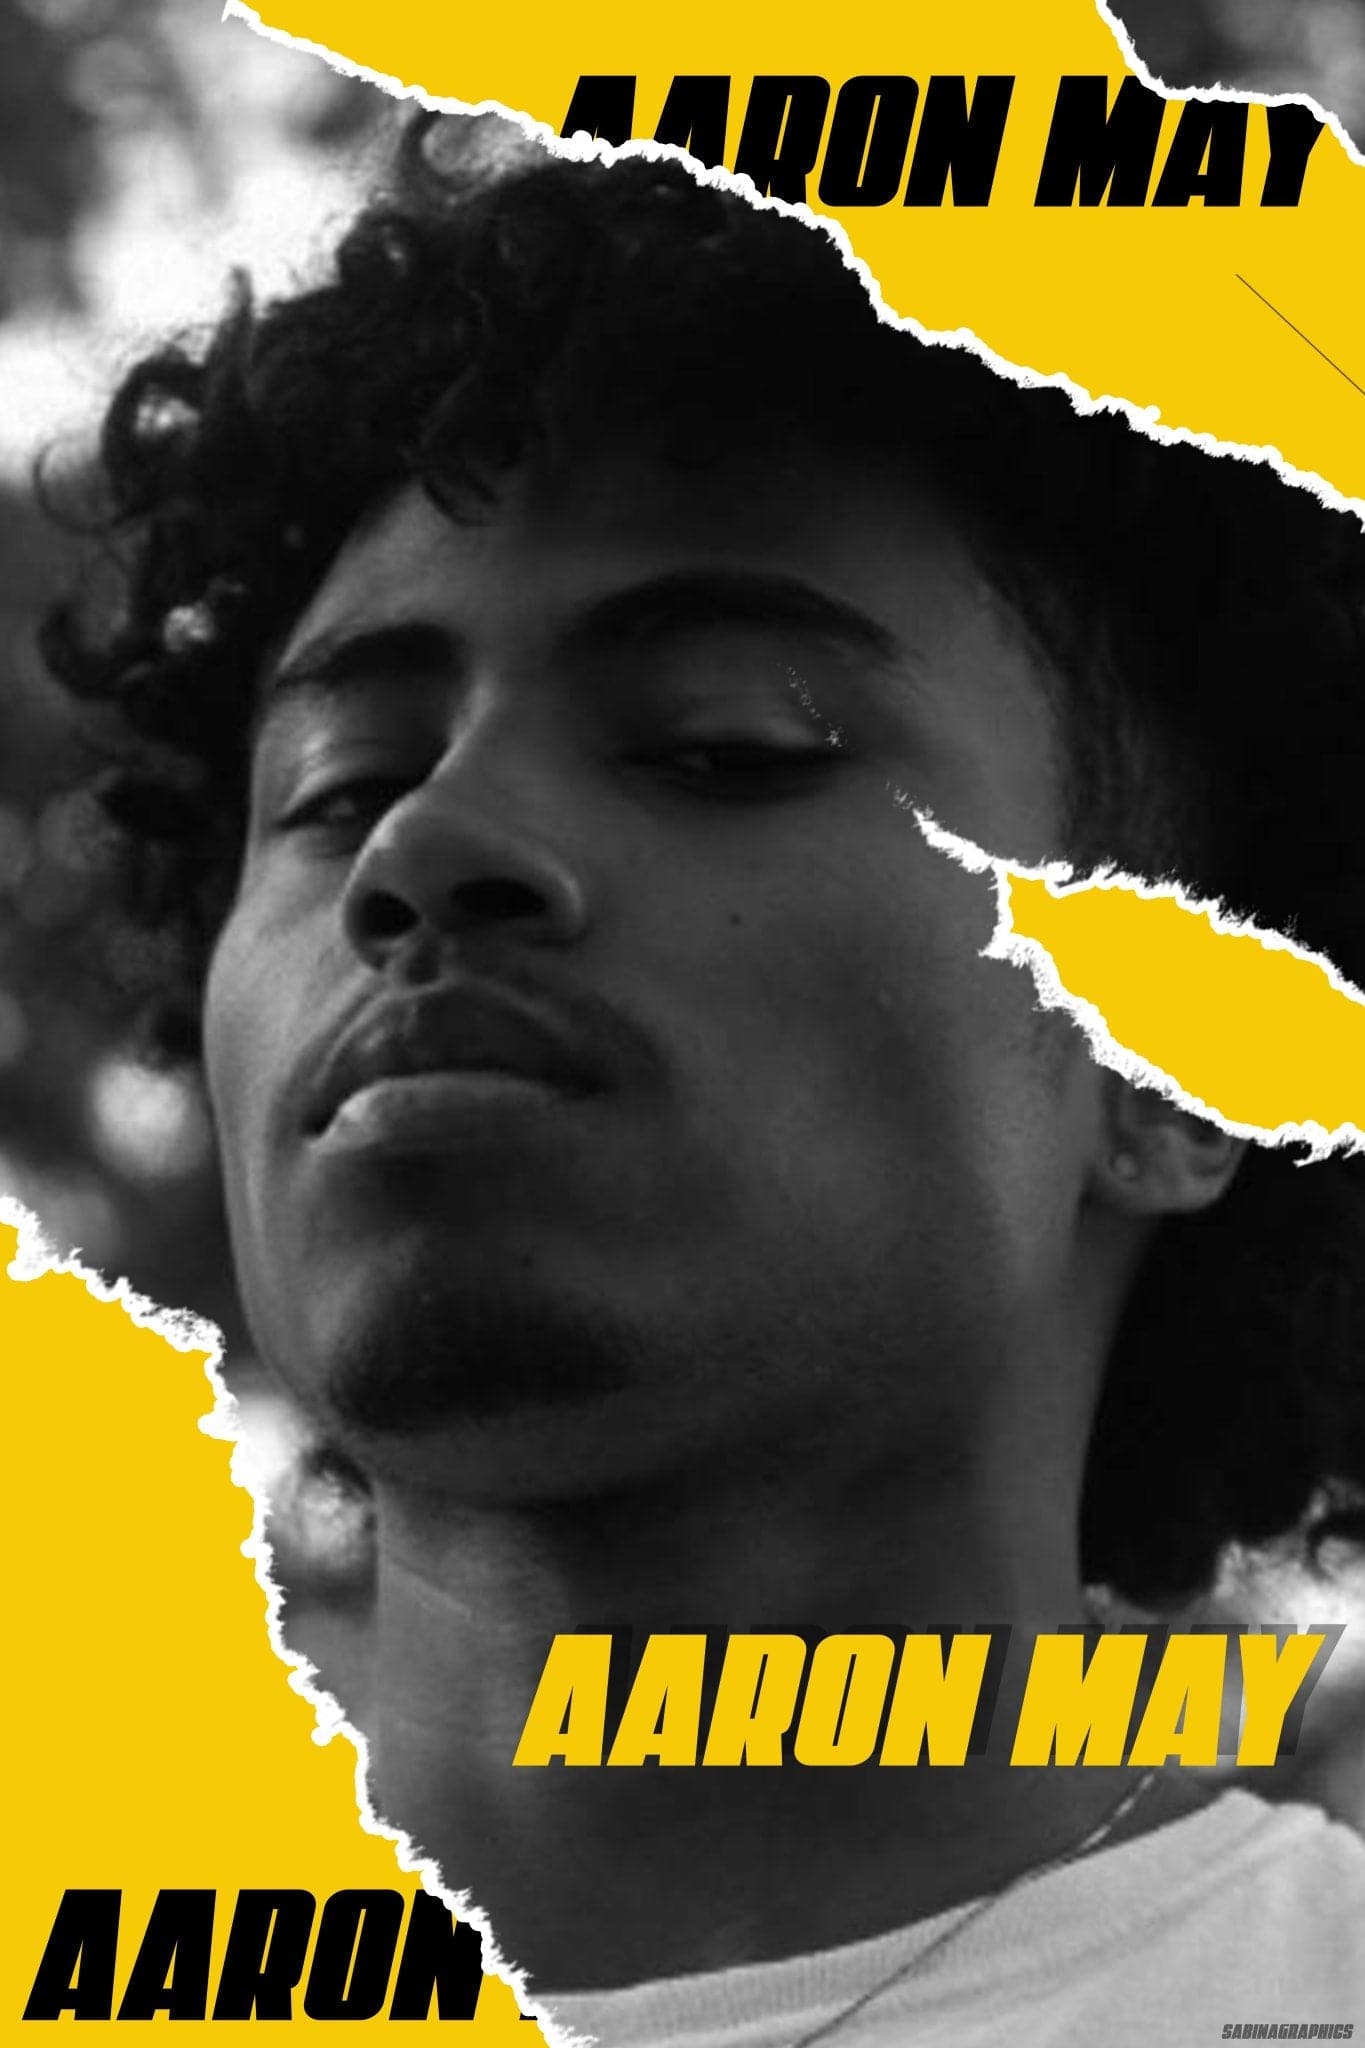 Aaron May ‘Scrapbook’ Poster - Posters Plug